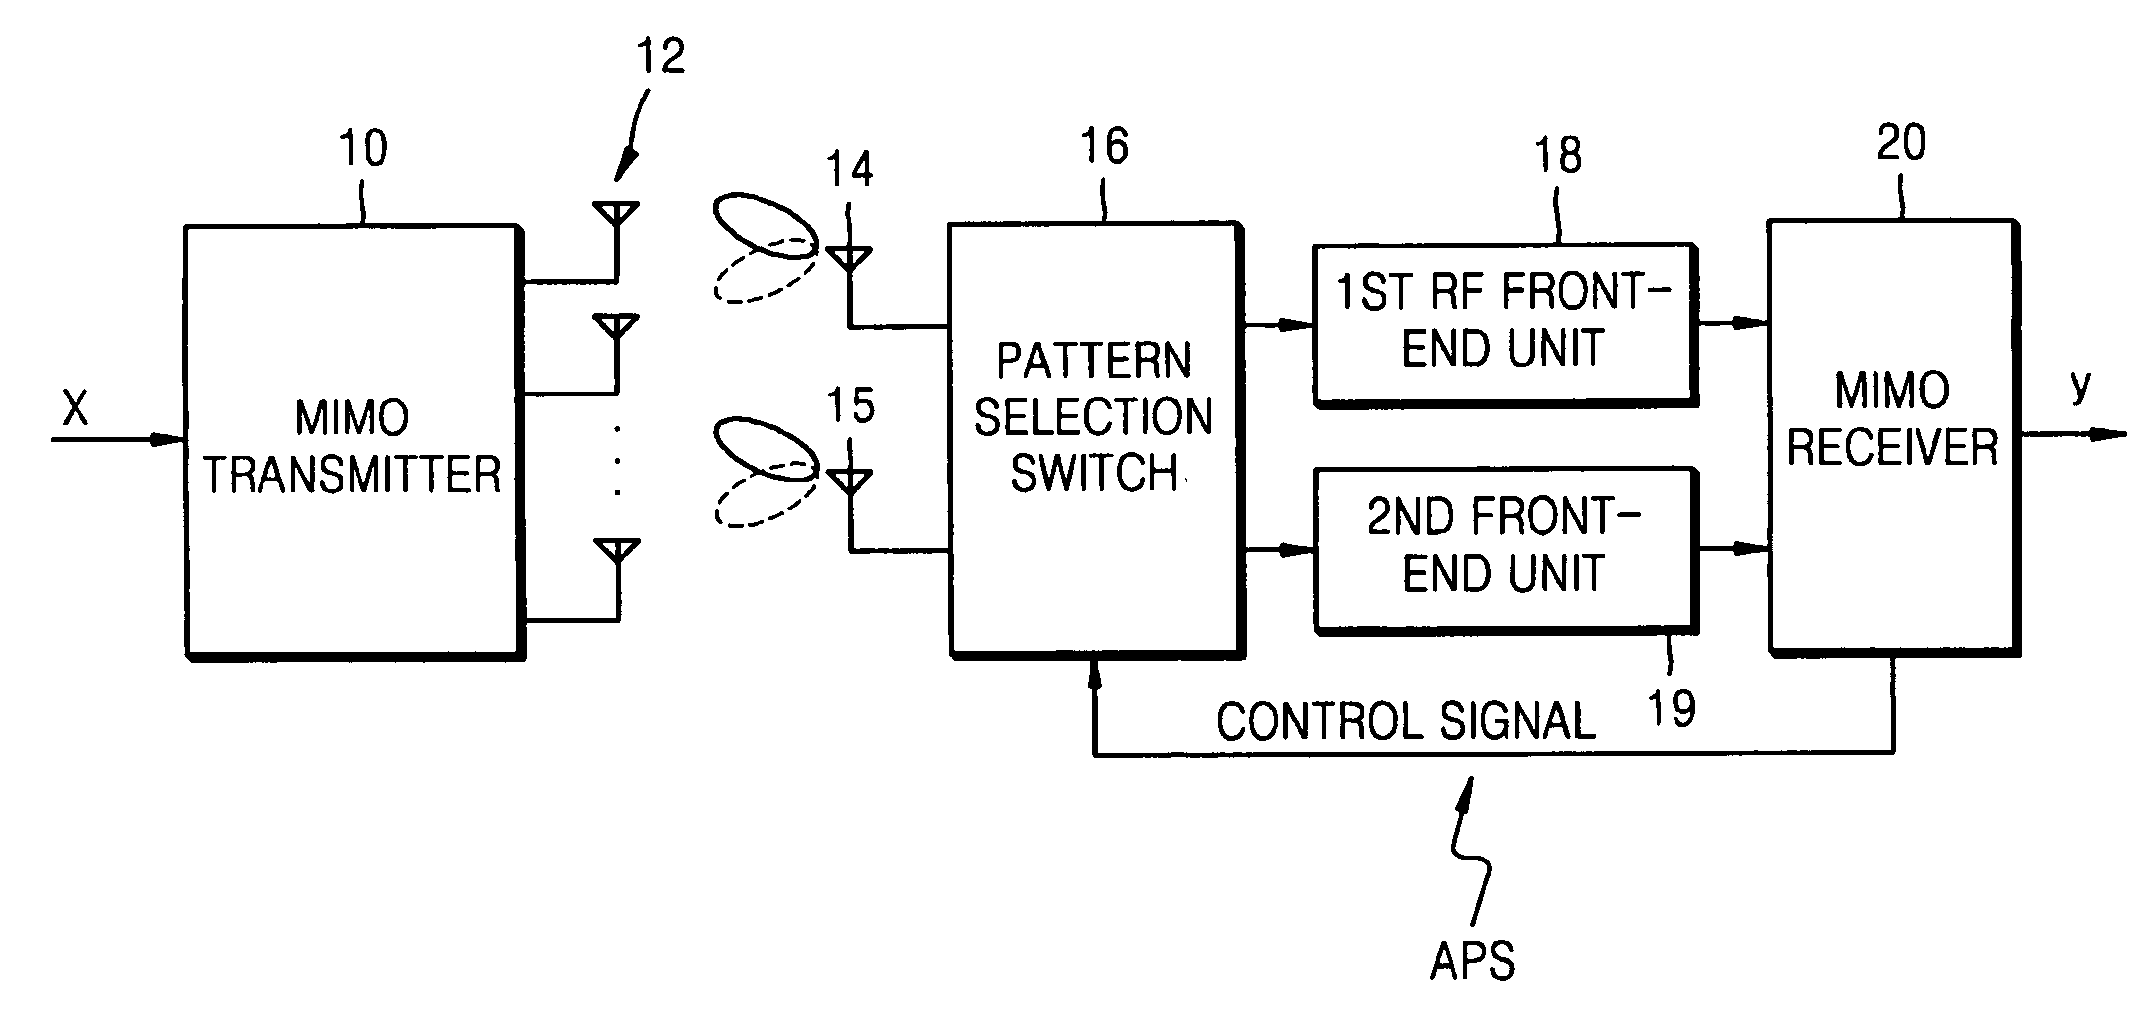 MIMO radio communication apparatus and method